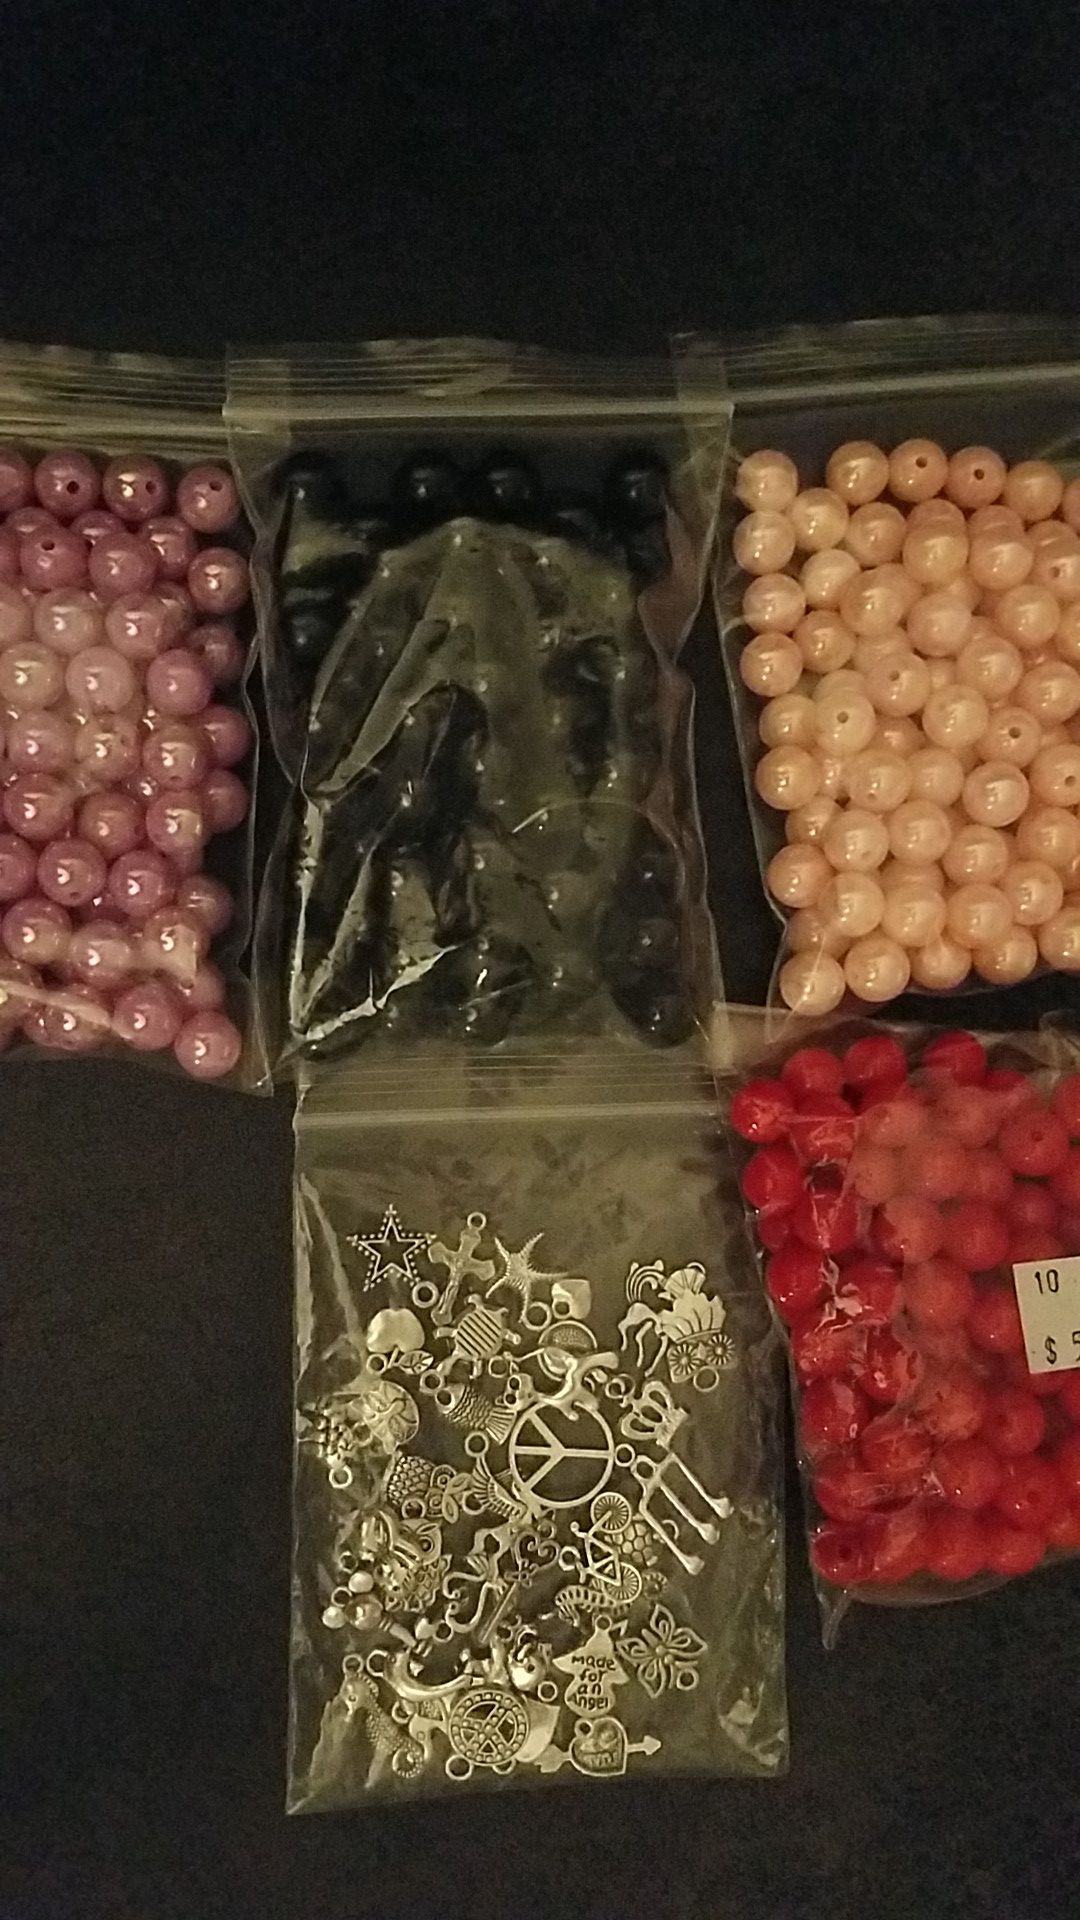 Beads & charms